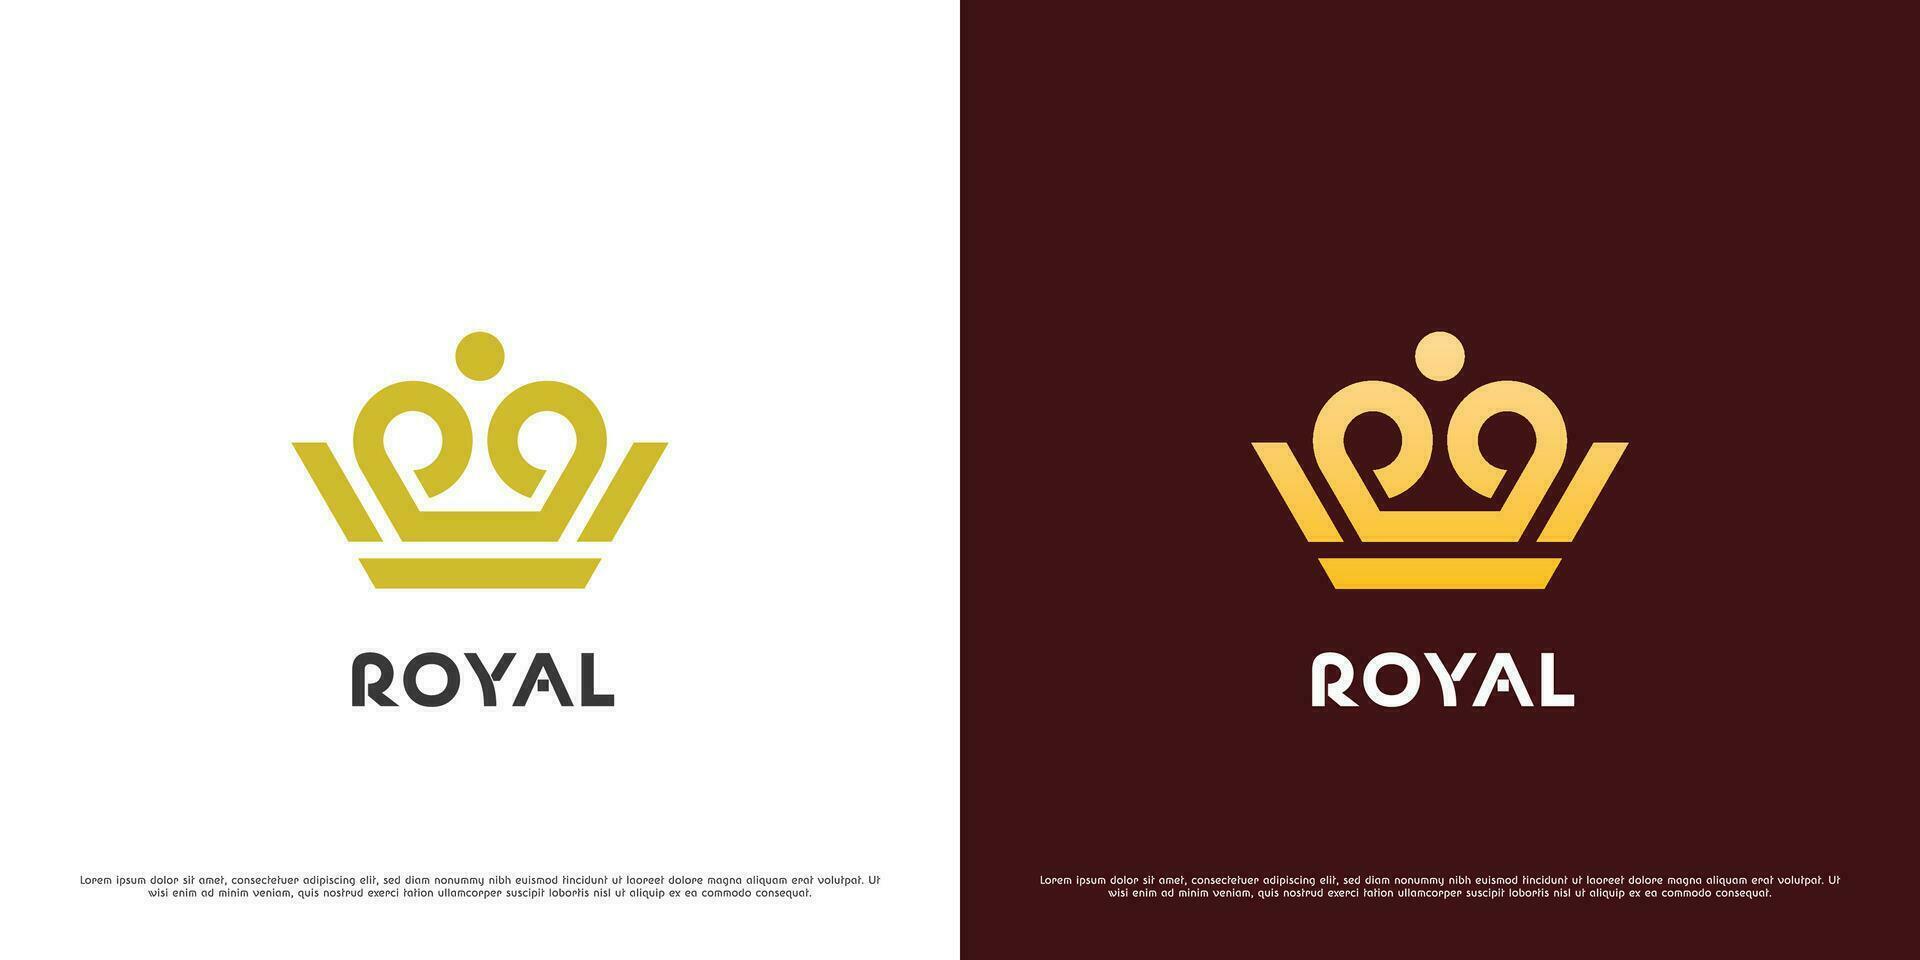 Royal crown logo design illustration. Simple geometric silhouette monarch royal pride king queen prince imperial heraldic aristocratic elegant icon. vector